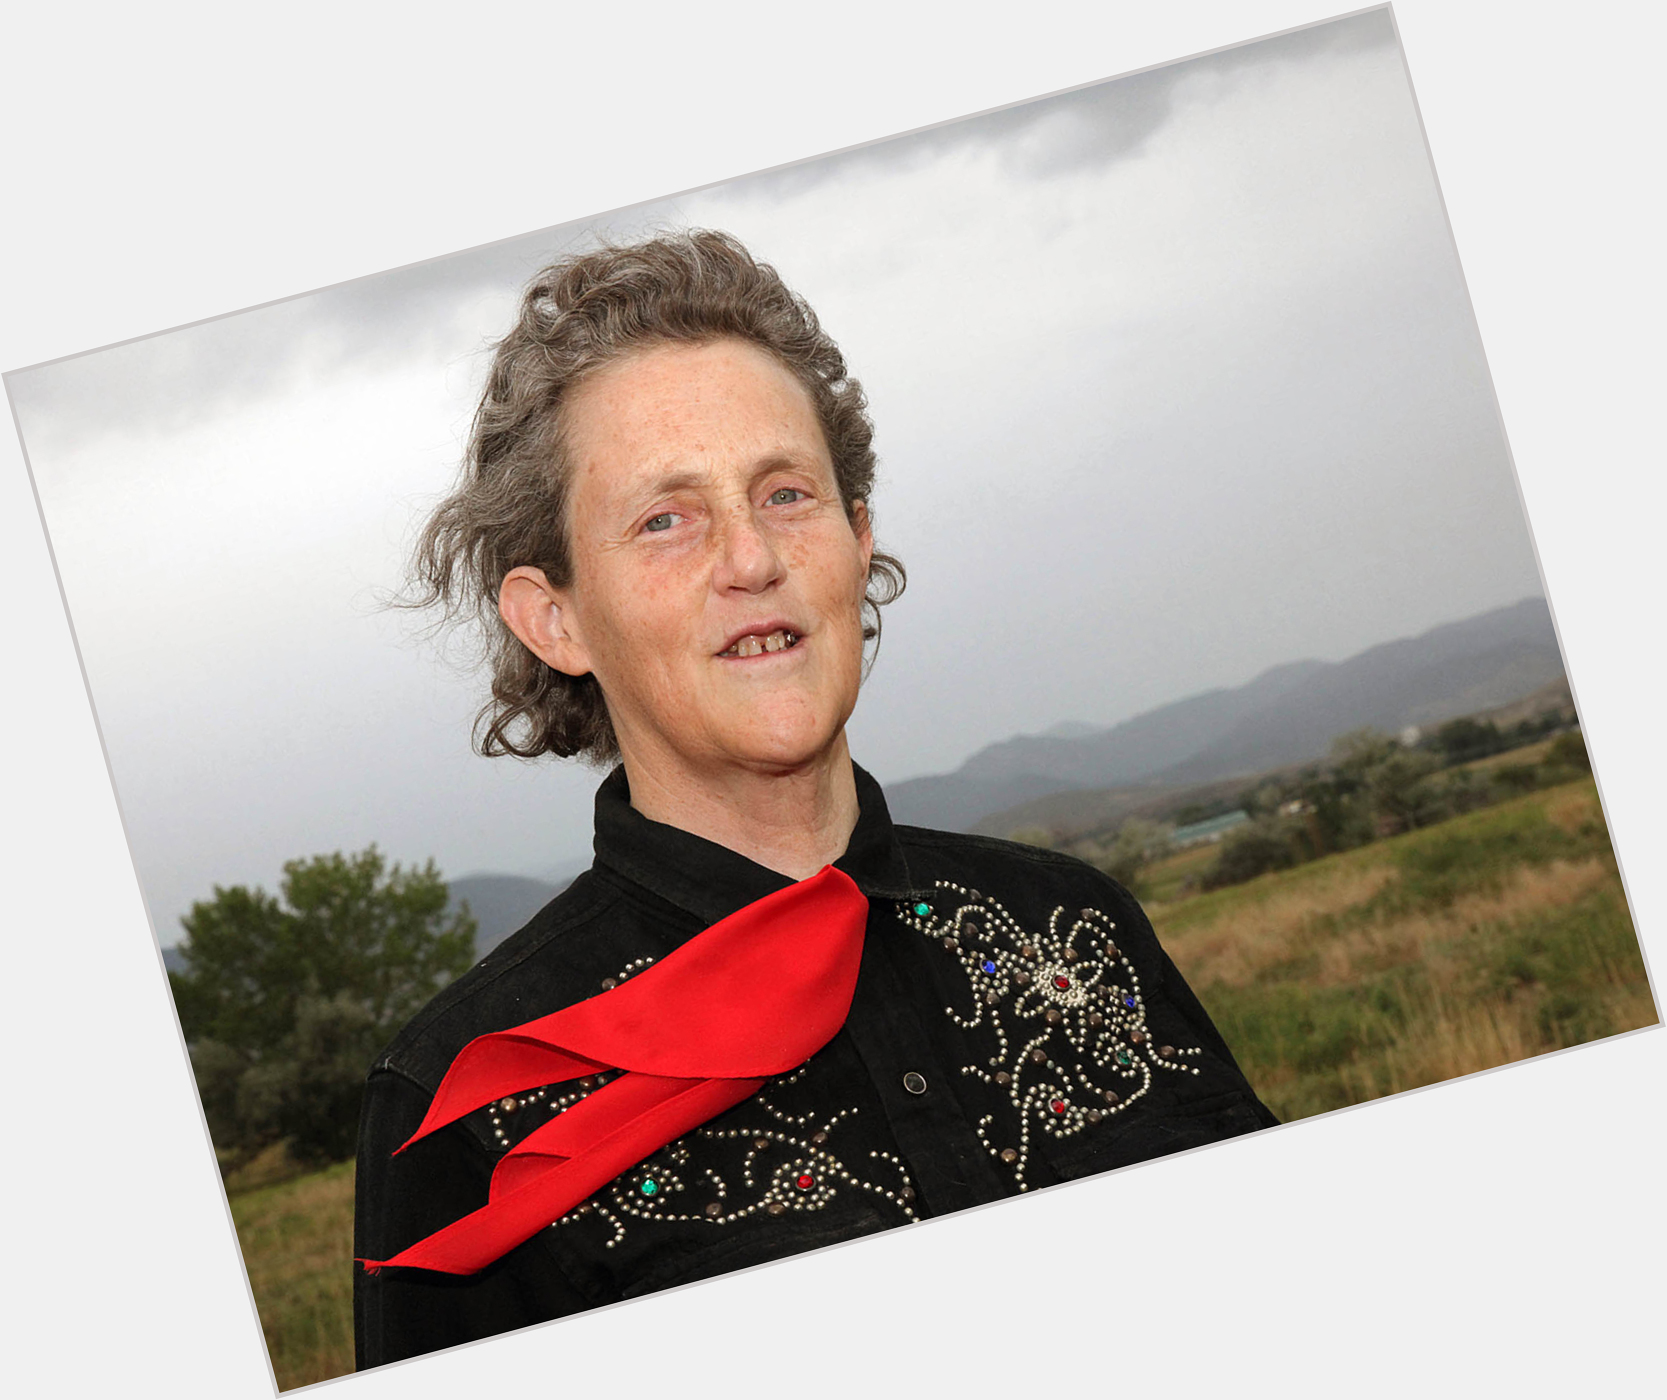 Https://fanpagepress.net/m/T/Temple Grandin New Pic 1